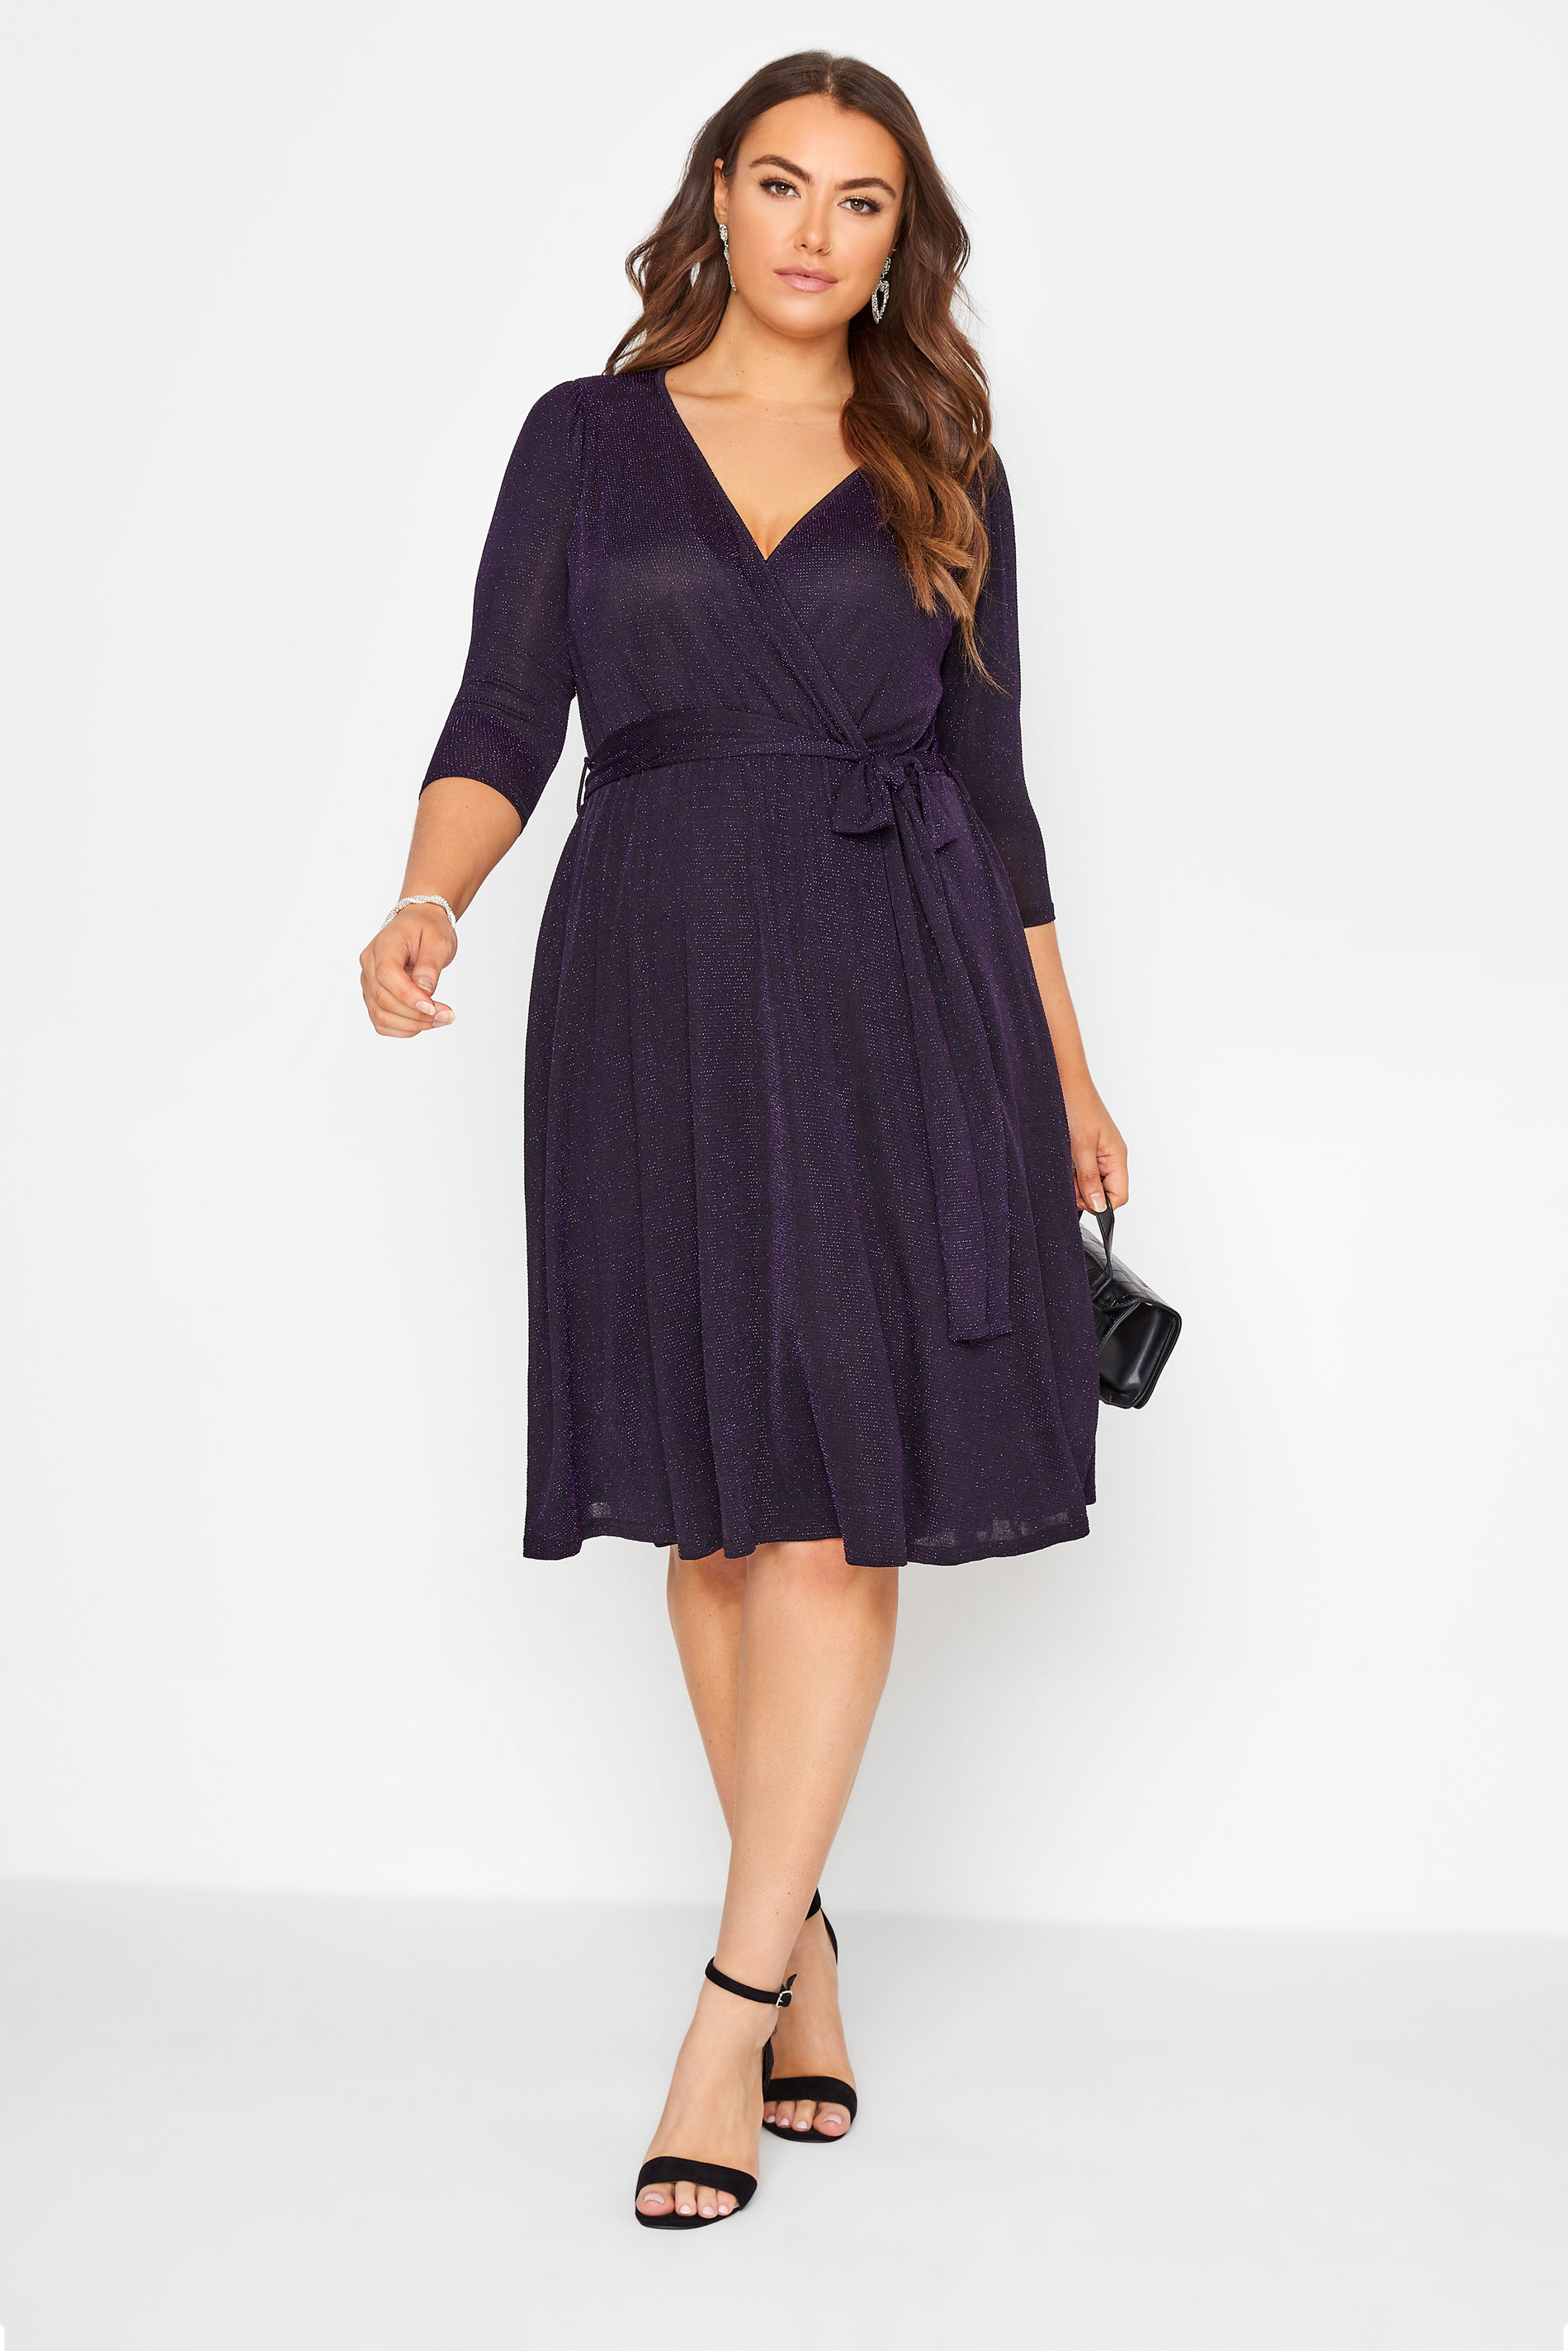 Plus Size YOURS LONDON Purple Glitter Wrap Dress | Yours Clothing